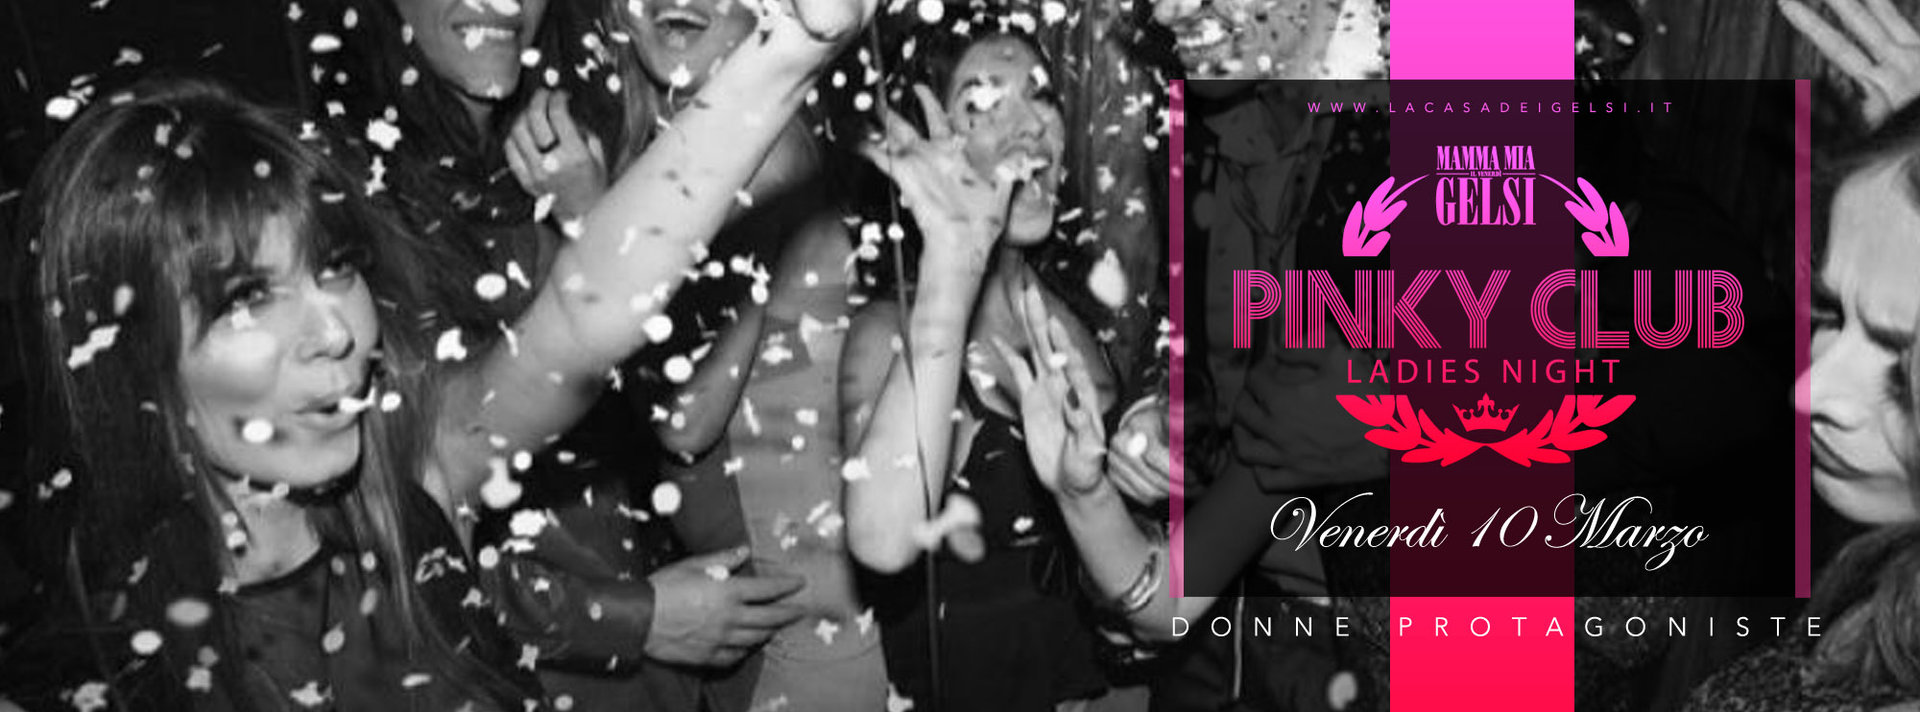 Pinky club - Il club delle donne ai Gelsi - 10 mar